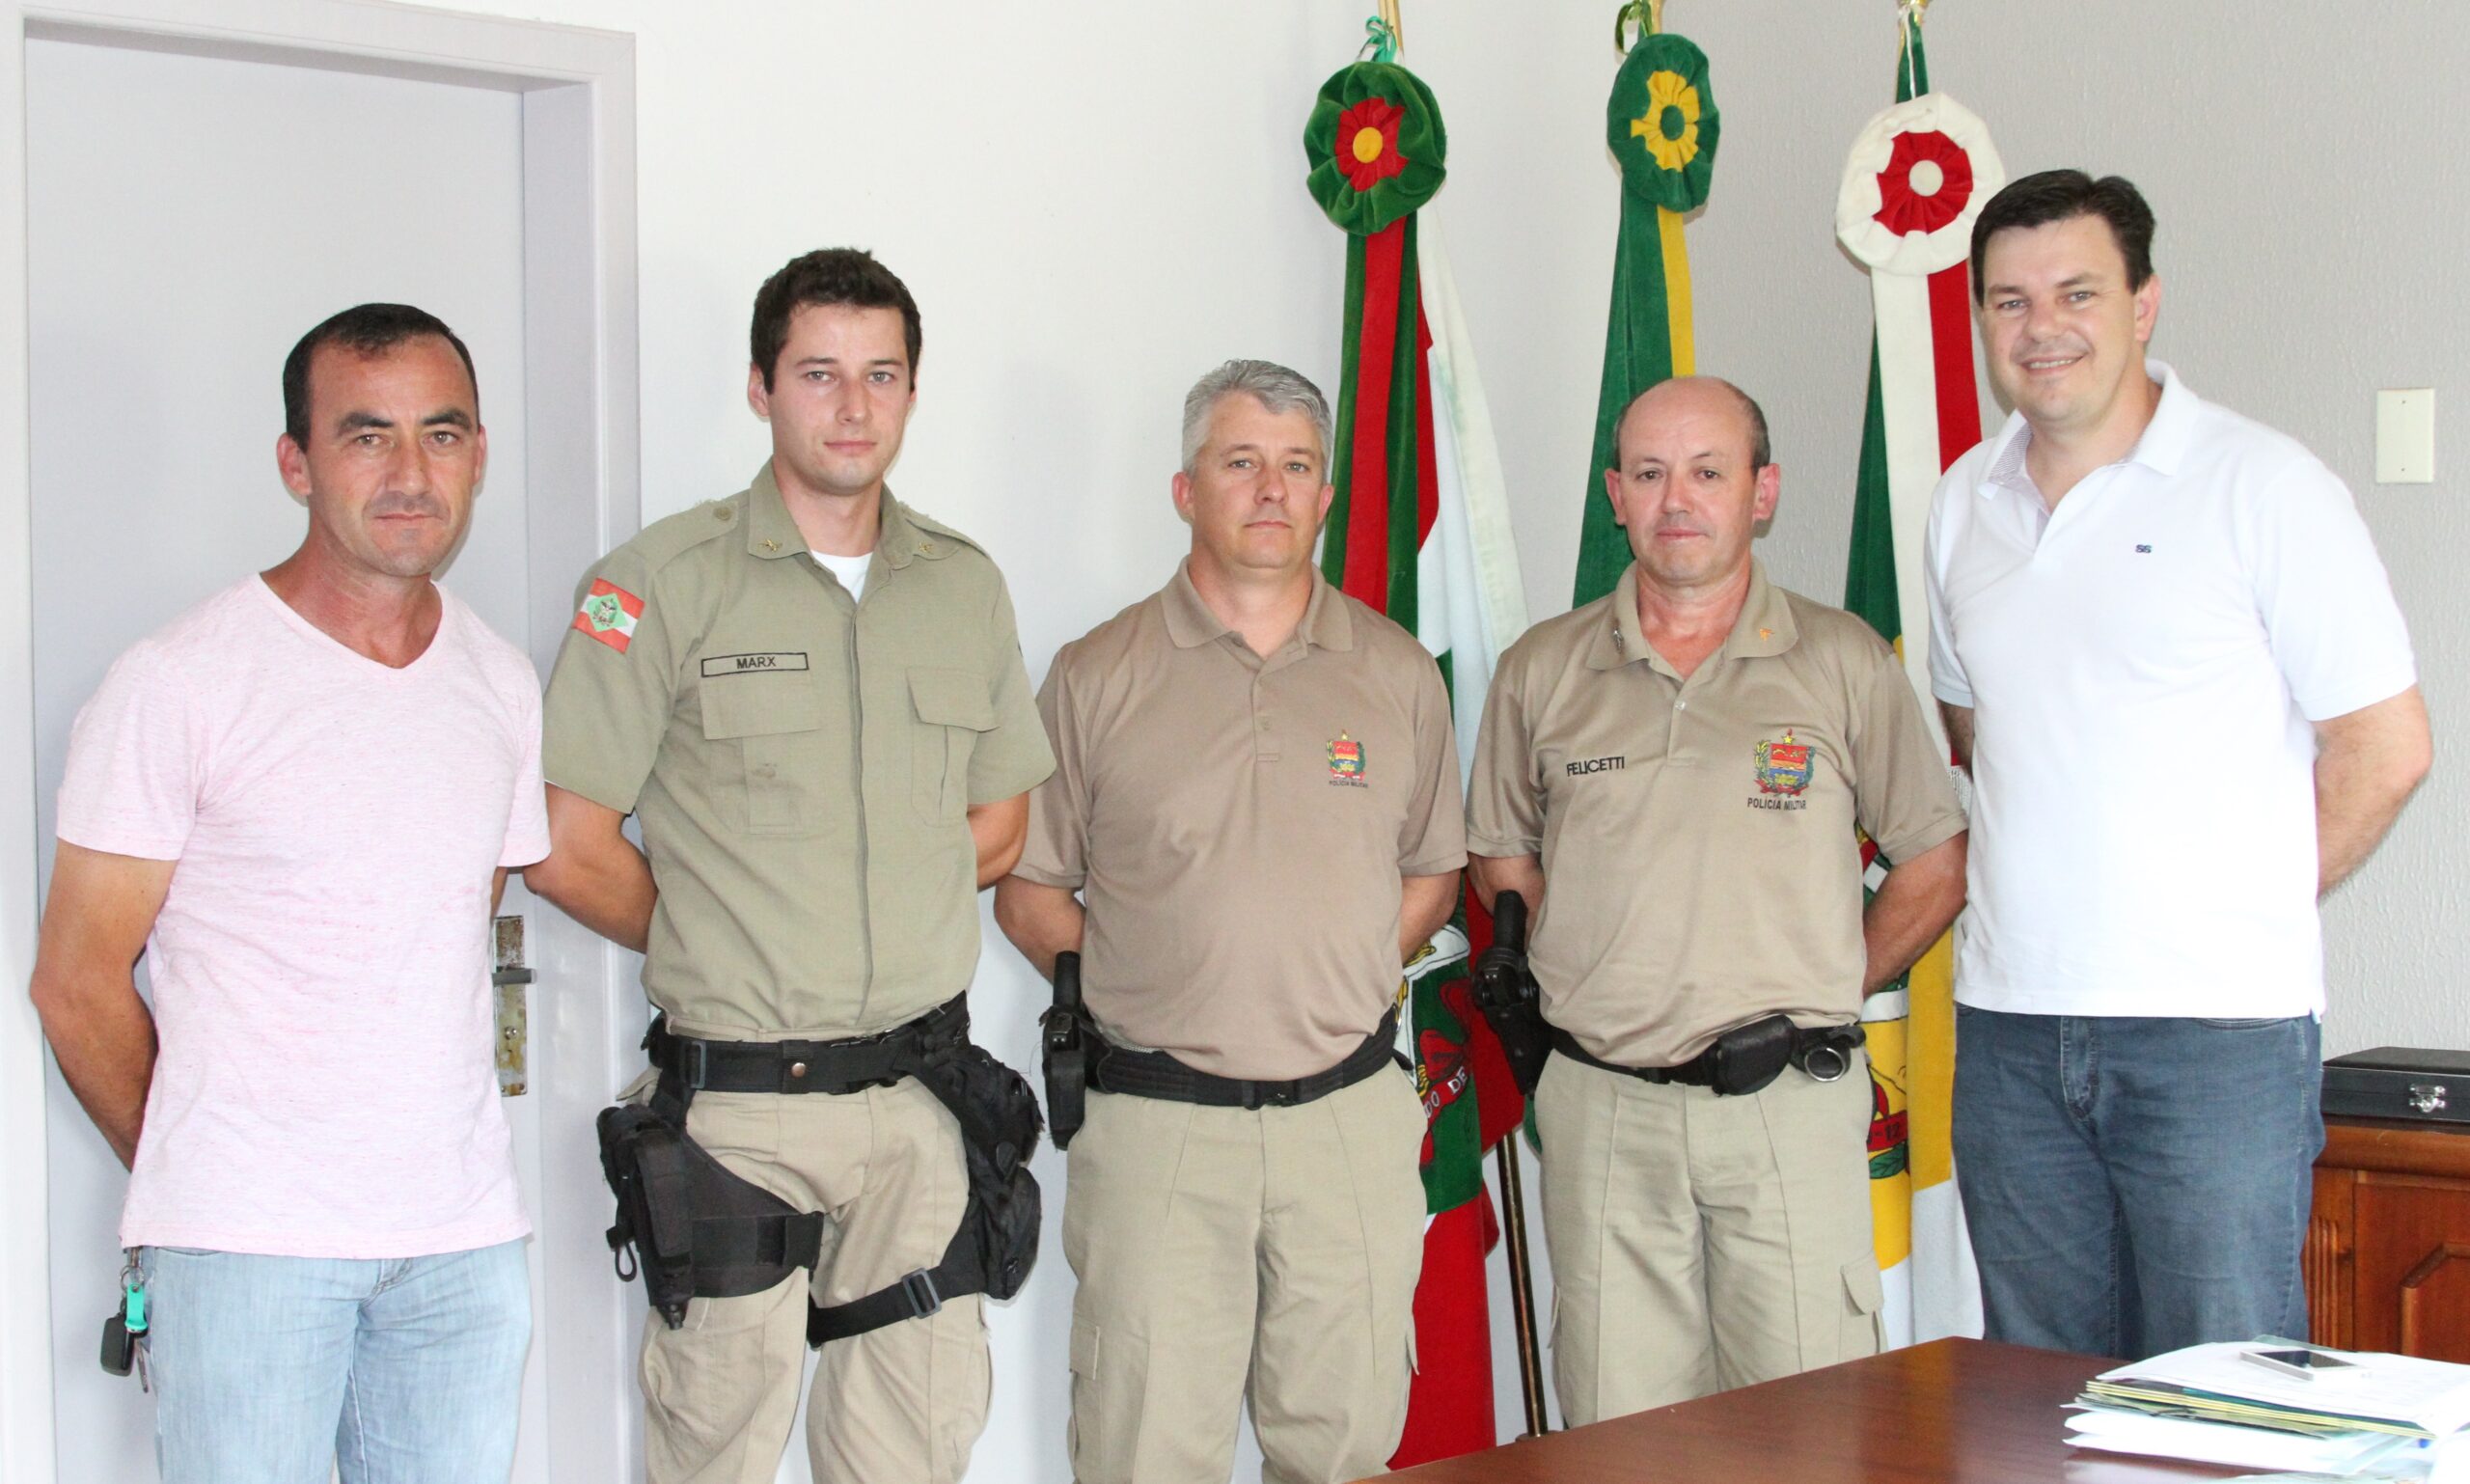 Vice-prefeito Sadan, policiais militares Marx, Schmitz e Felicetti e prefeito Daniel Kothe, discutiram avanços e pleitos para a segurança pública no município